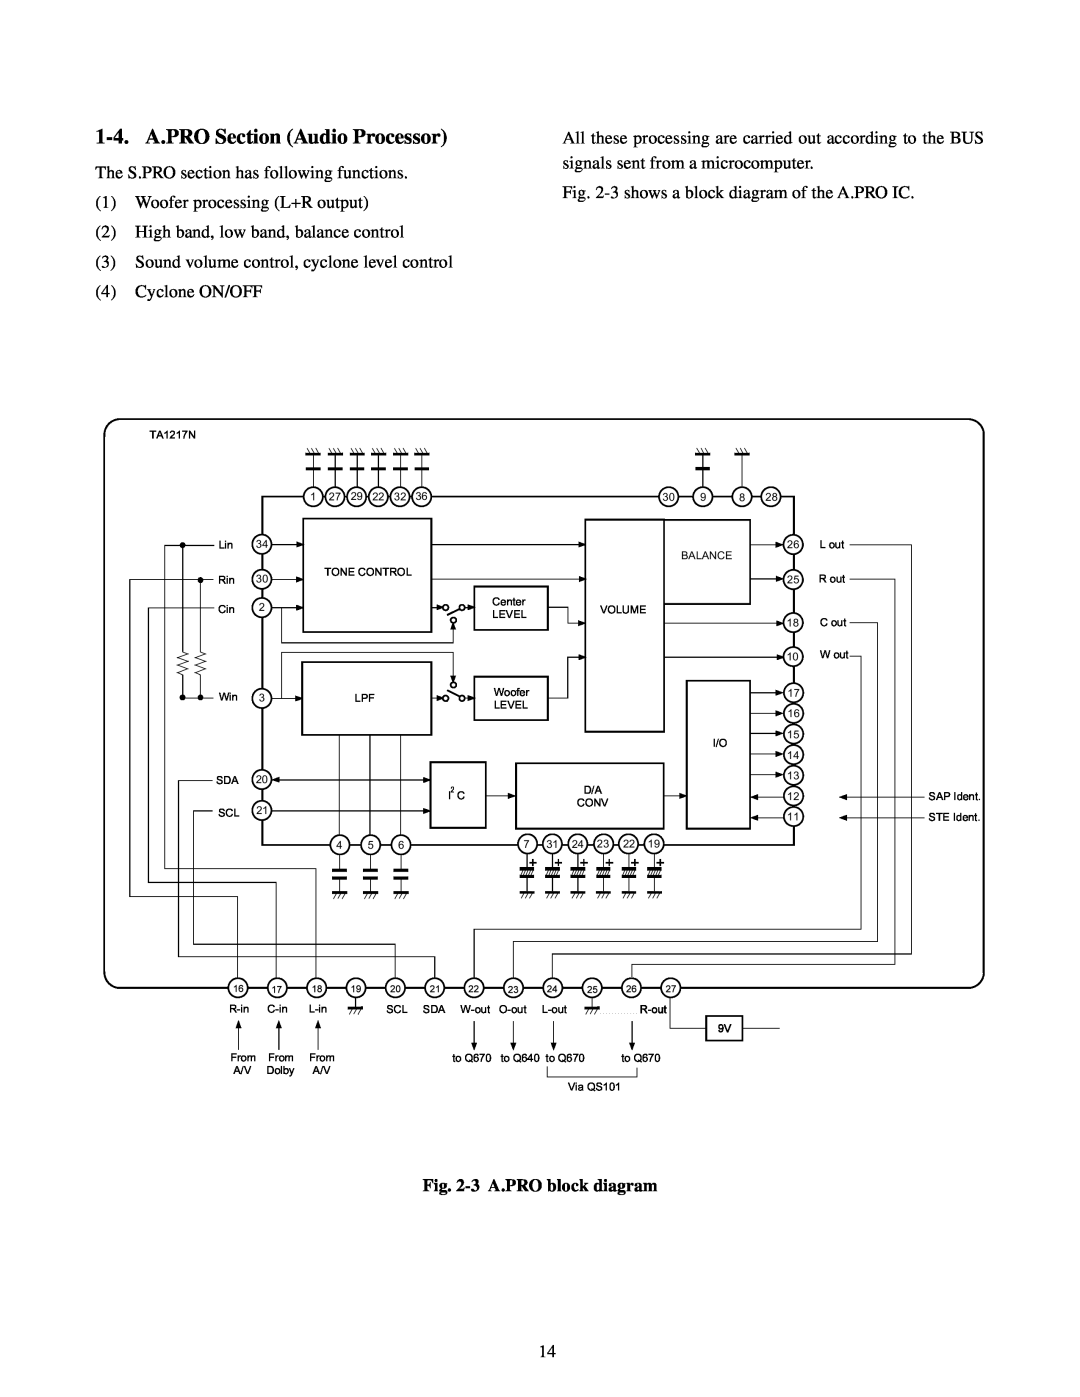 Toshiba TW40F80 manual 1-4. A.PRO Section Audio Processor, 3 A.PRO block diagram 